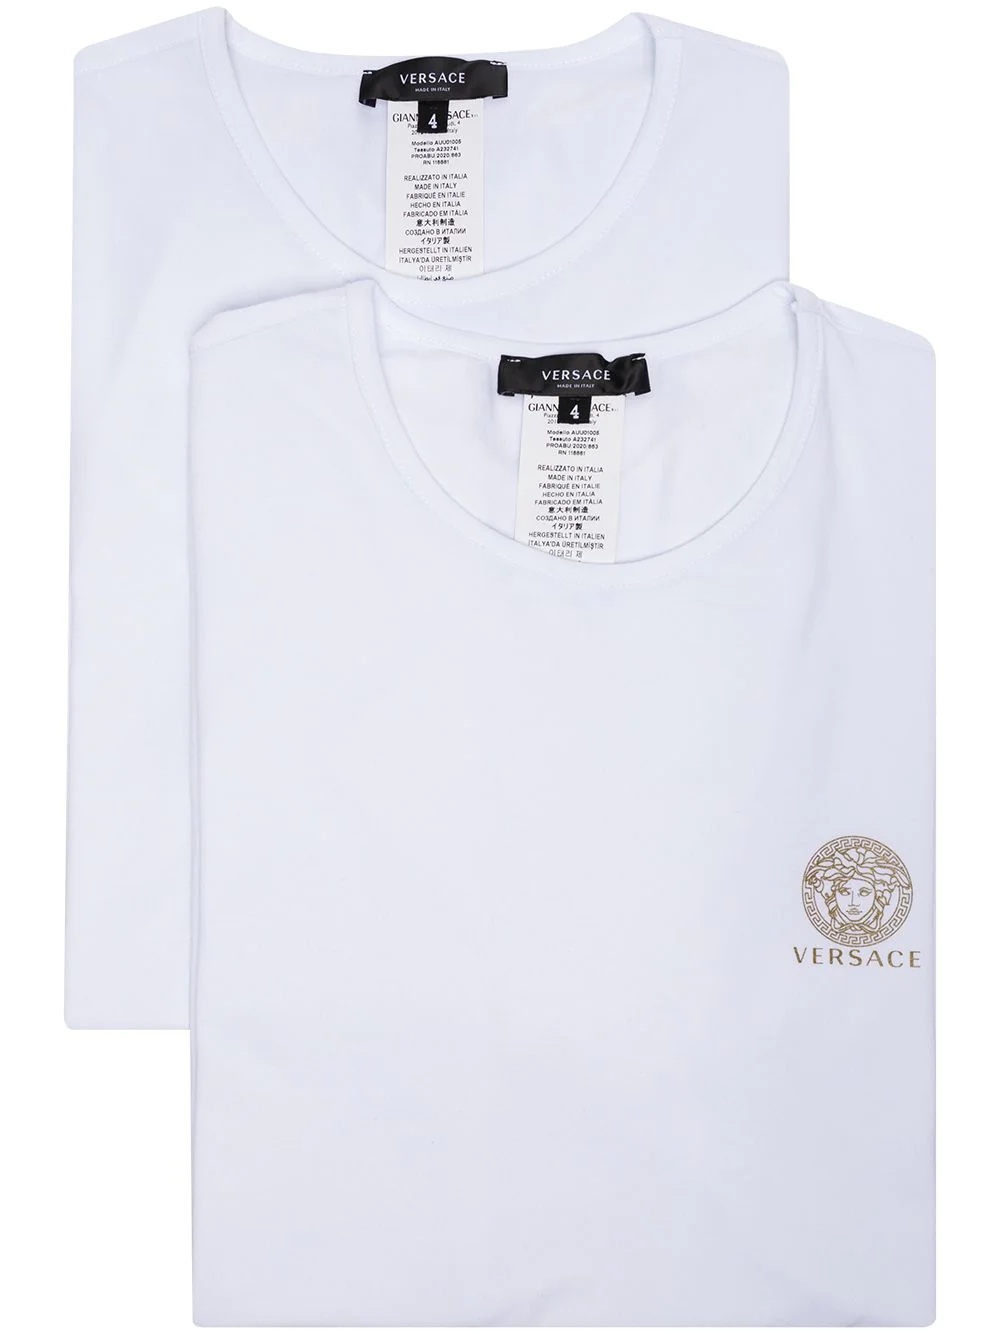 Medusa Crest set of two T-shirts - 1